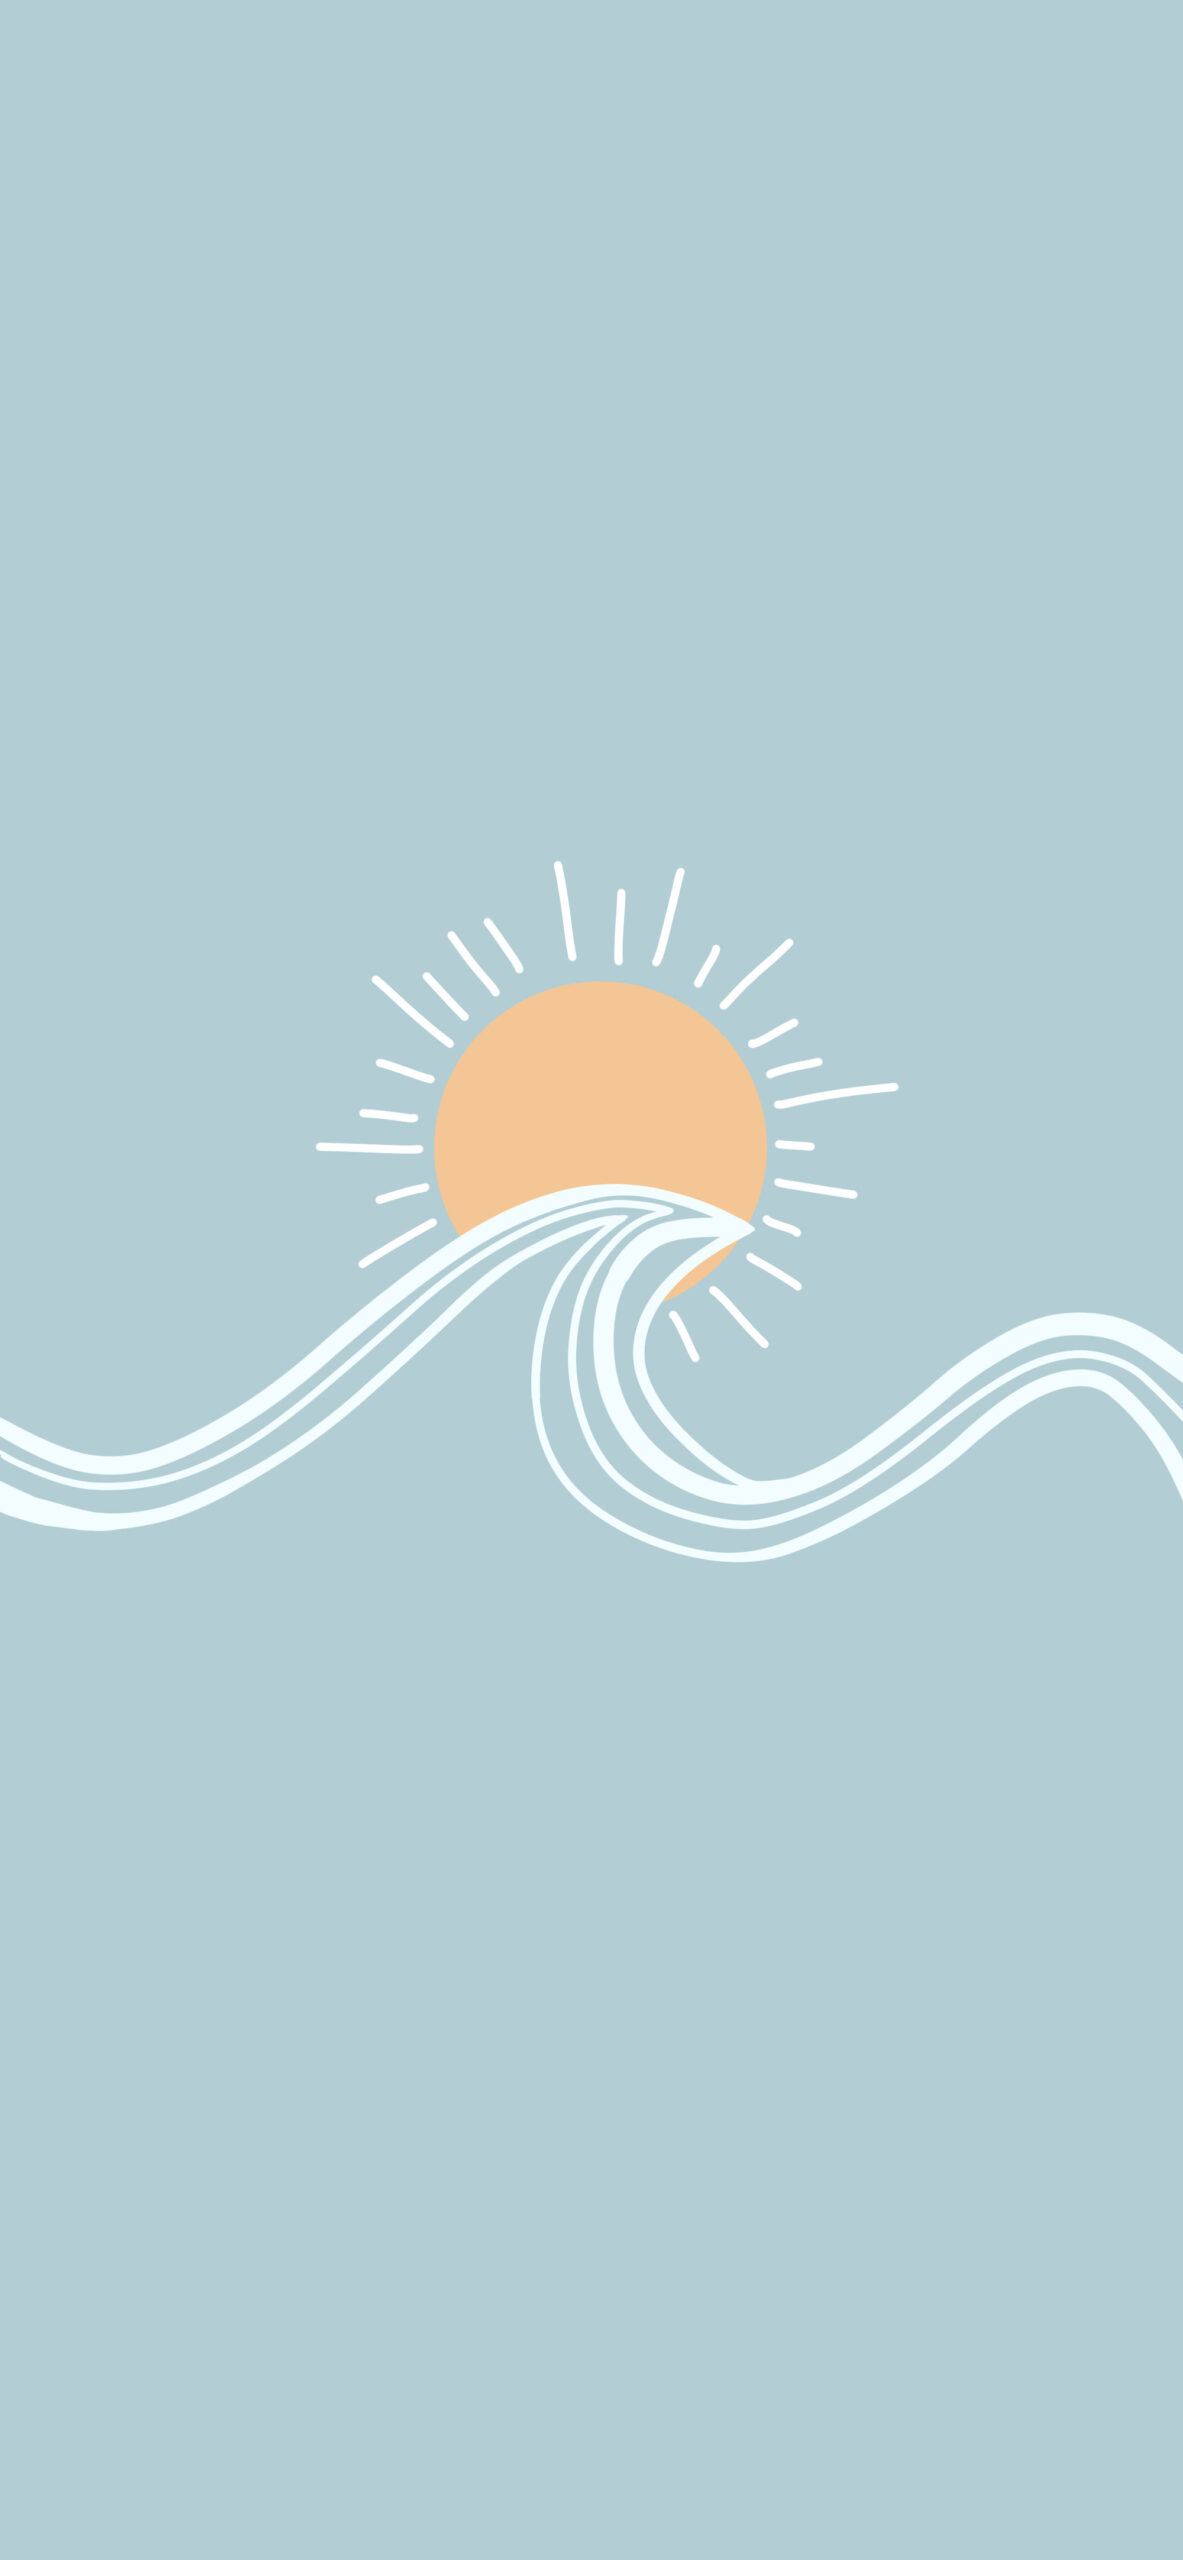  Illustration Hintergrundbild 1183x2560. Sun and Wave Blue Wallpaper Aesthetic Wallpaper for iPhone